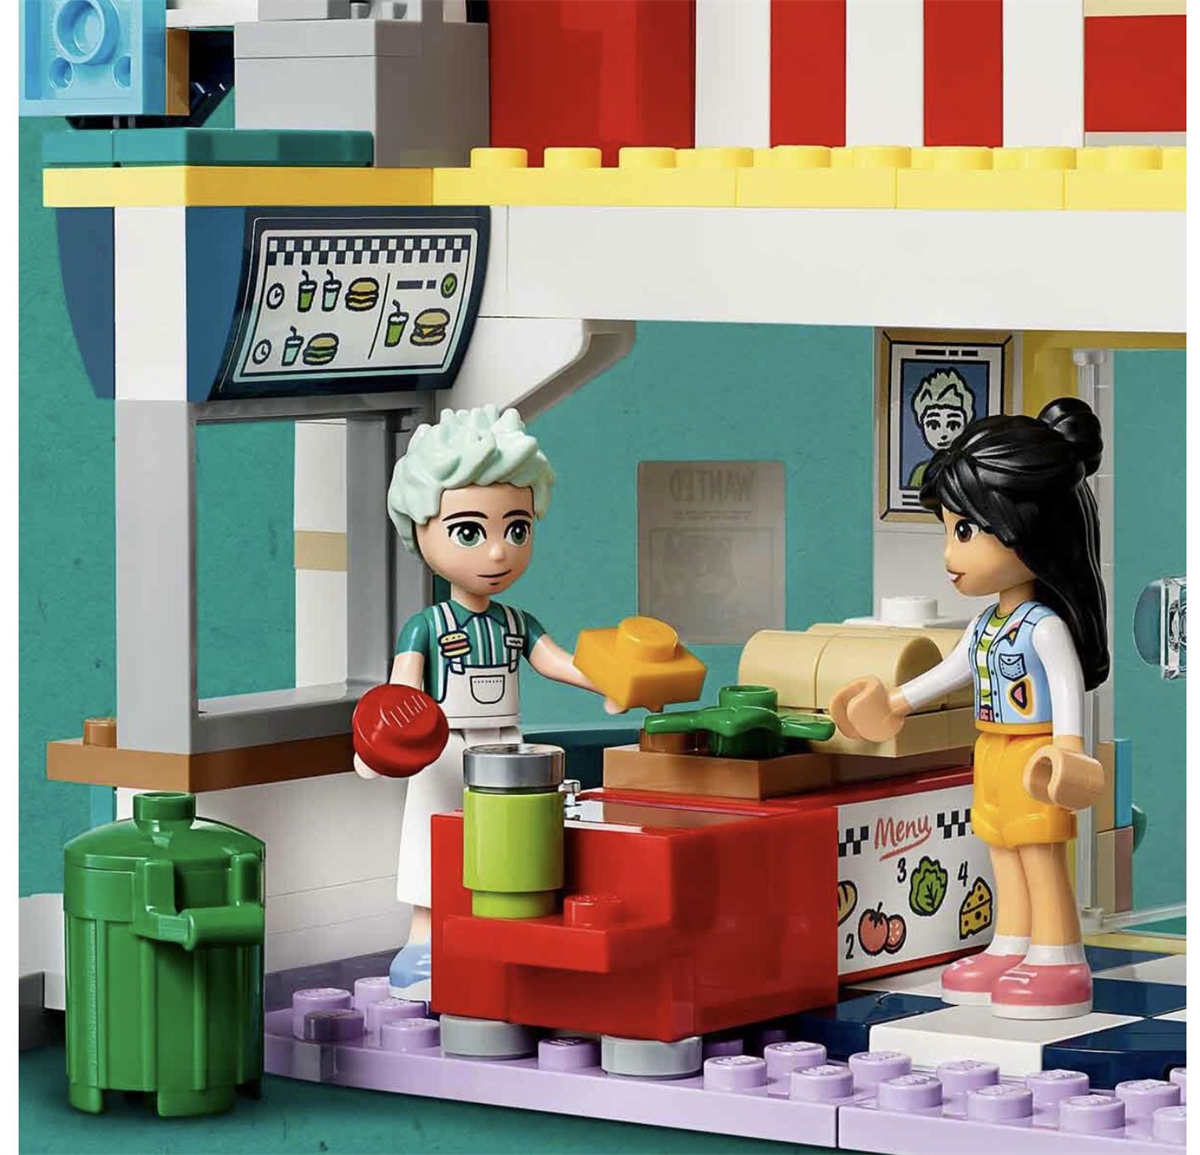 Lego Friends Heartlake Şehir Merkezi Restoranı 41728 | Toysall